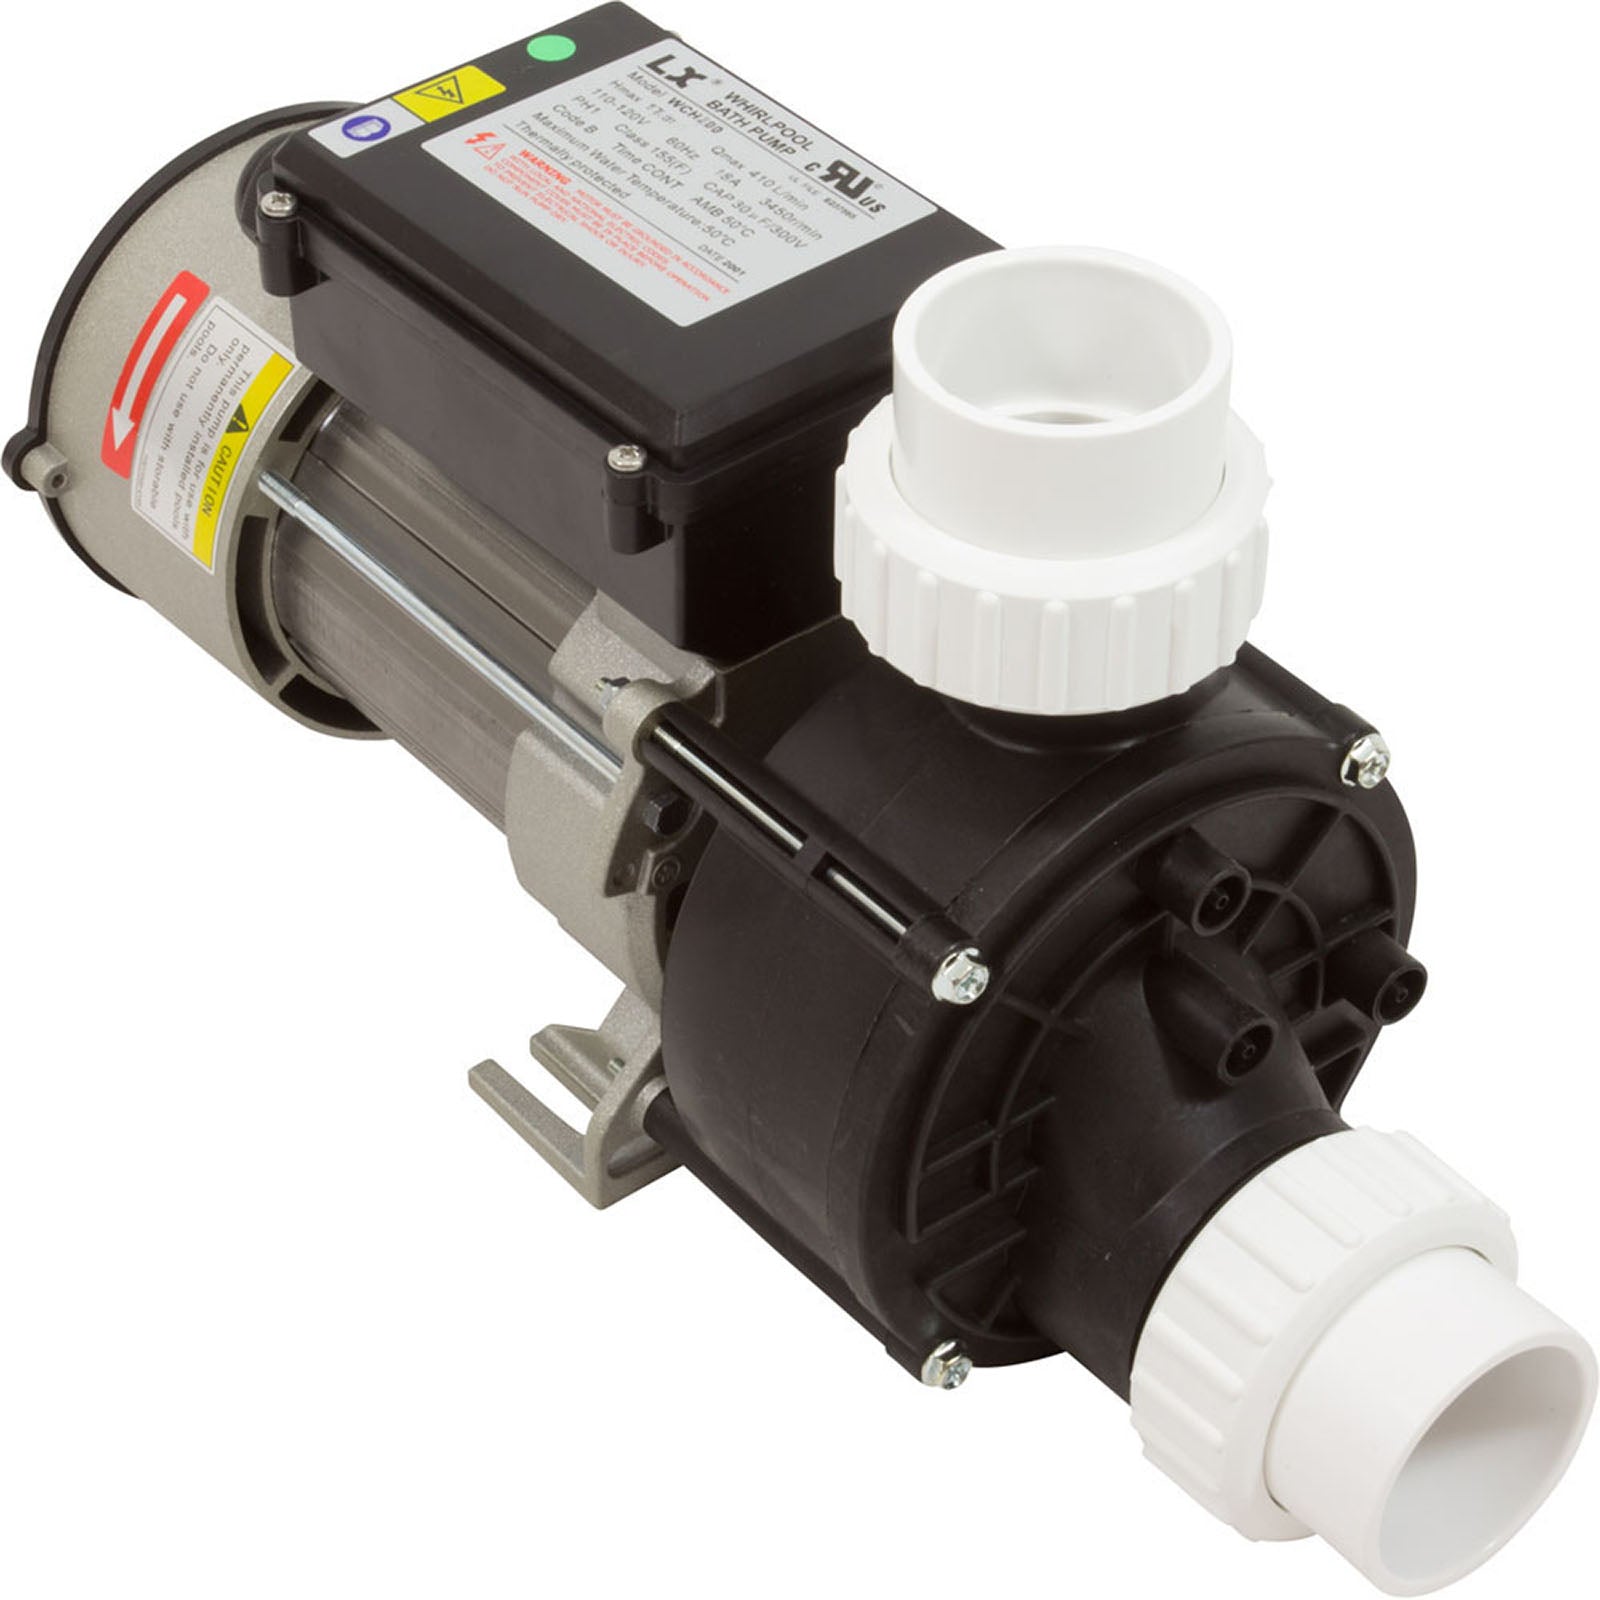 SD Replacement Hydromassage Bath Pump, 9.0A, 120v Air Switch (SD10)